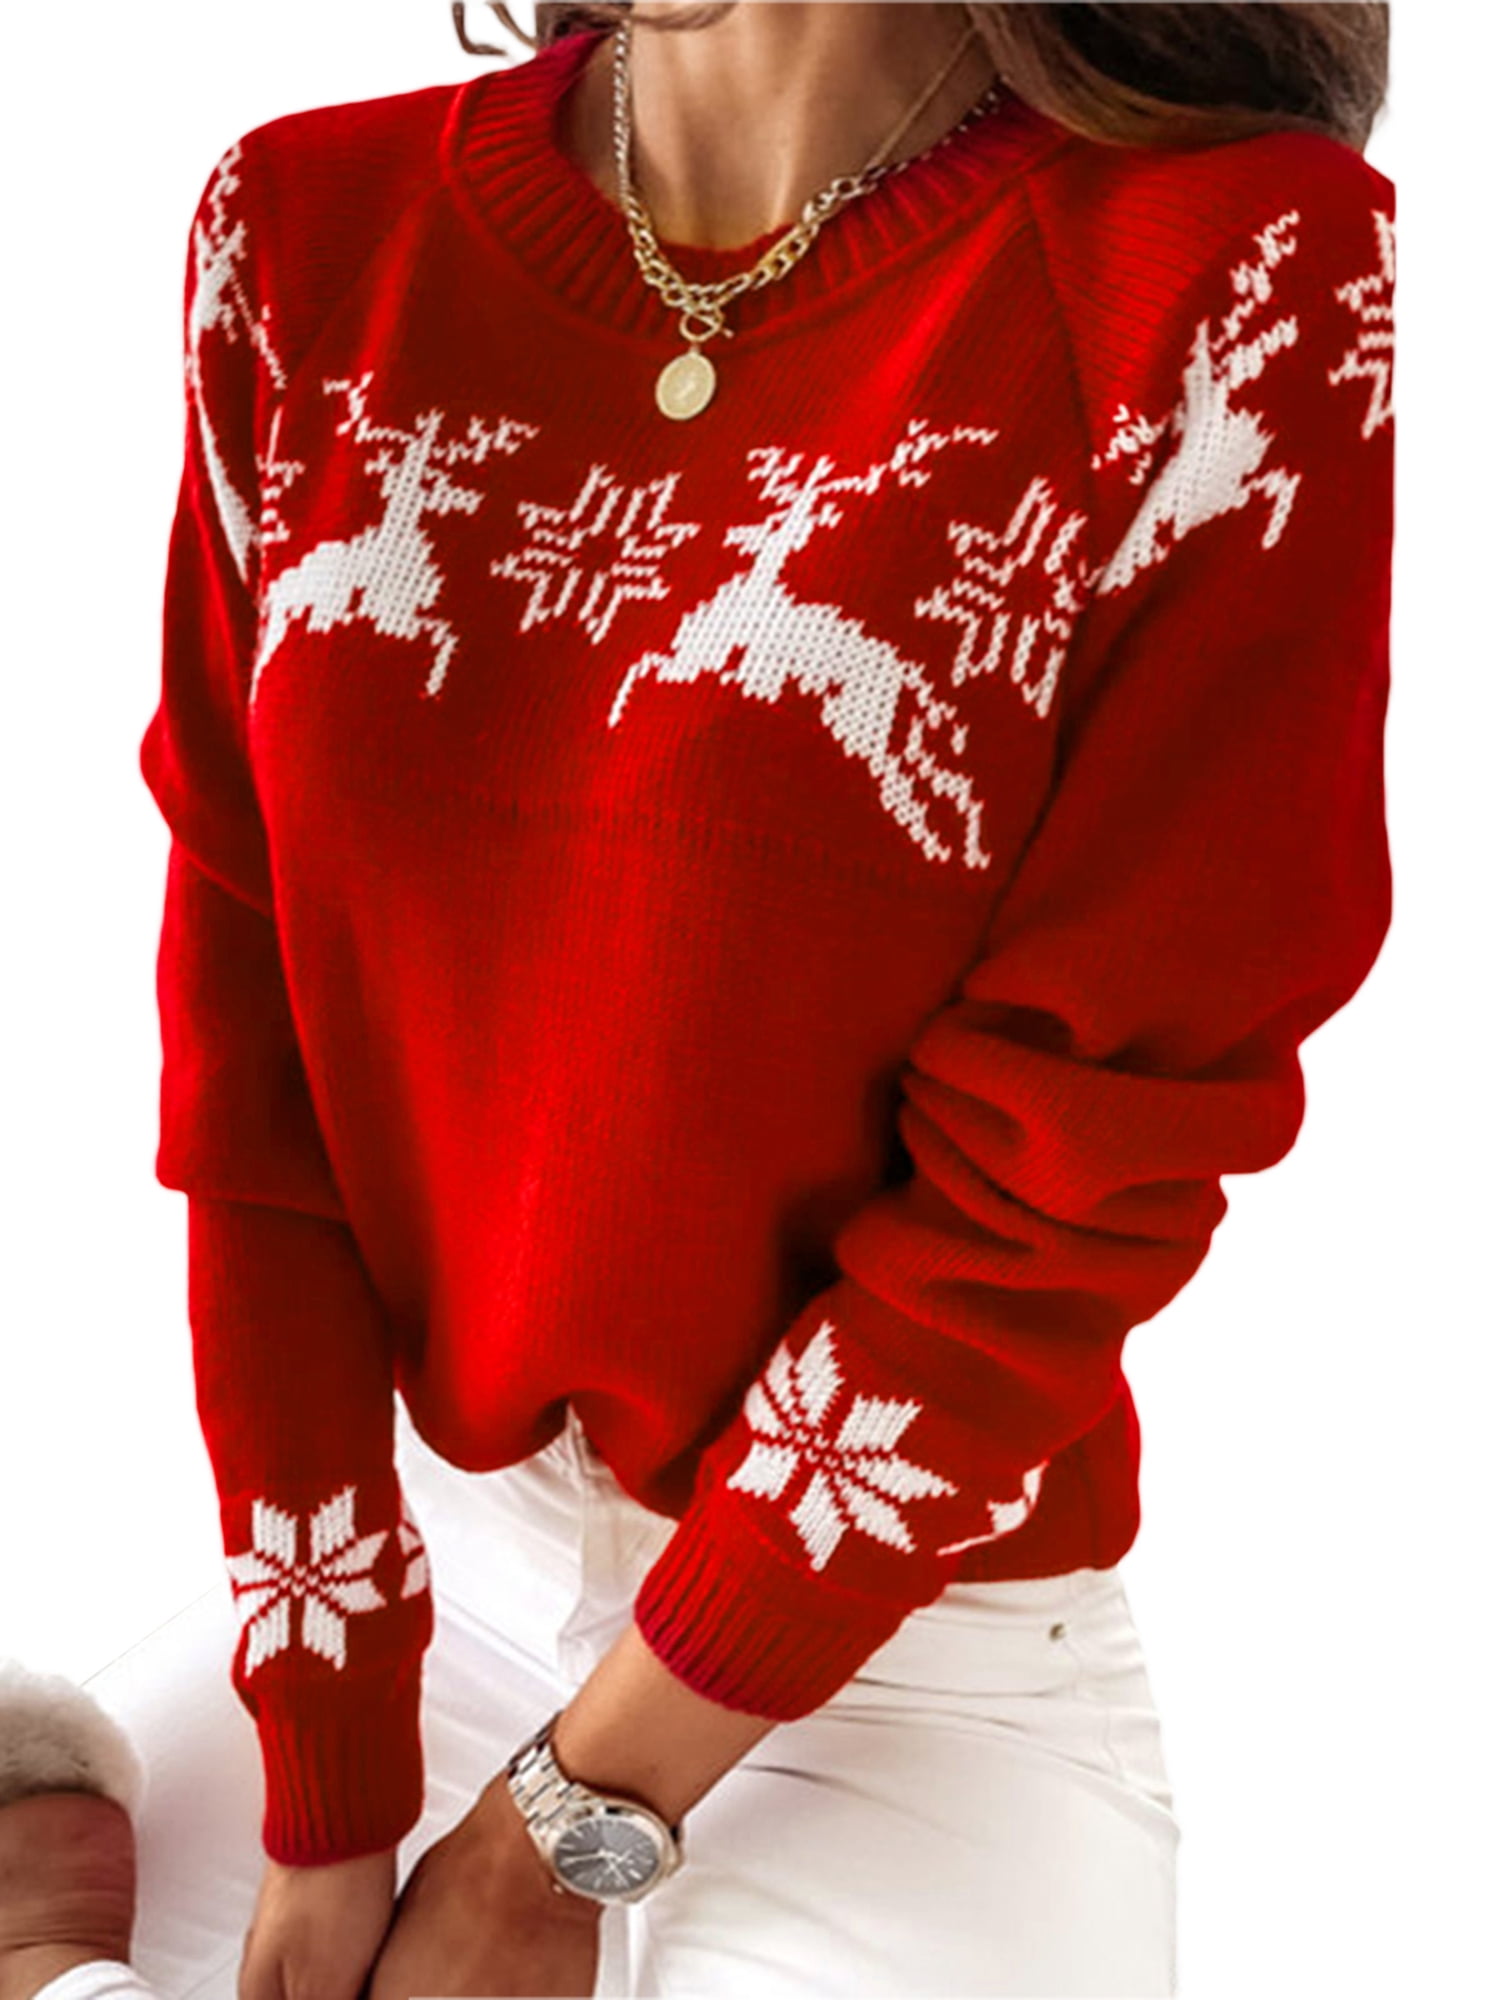 New Women's Long Sleeve Elk Snowflake Sweater Jumper Pullover Tops Outwear Xmas